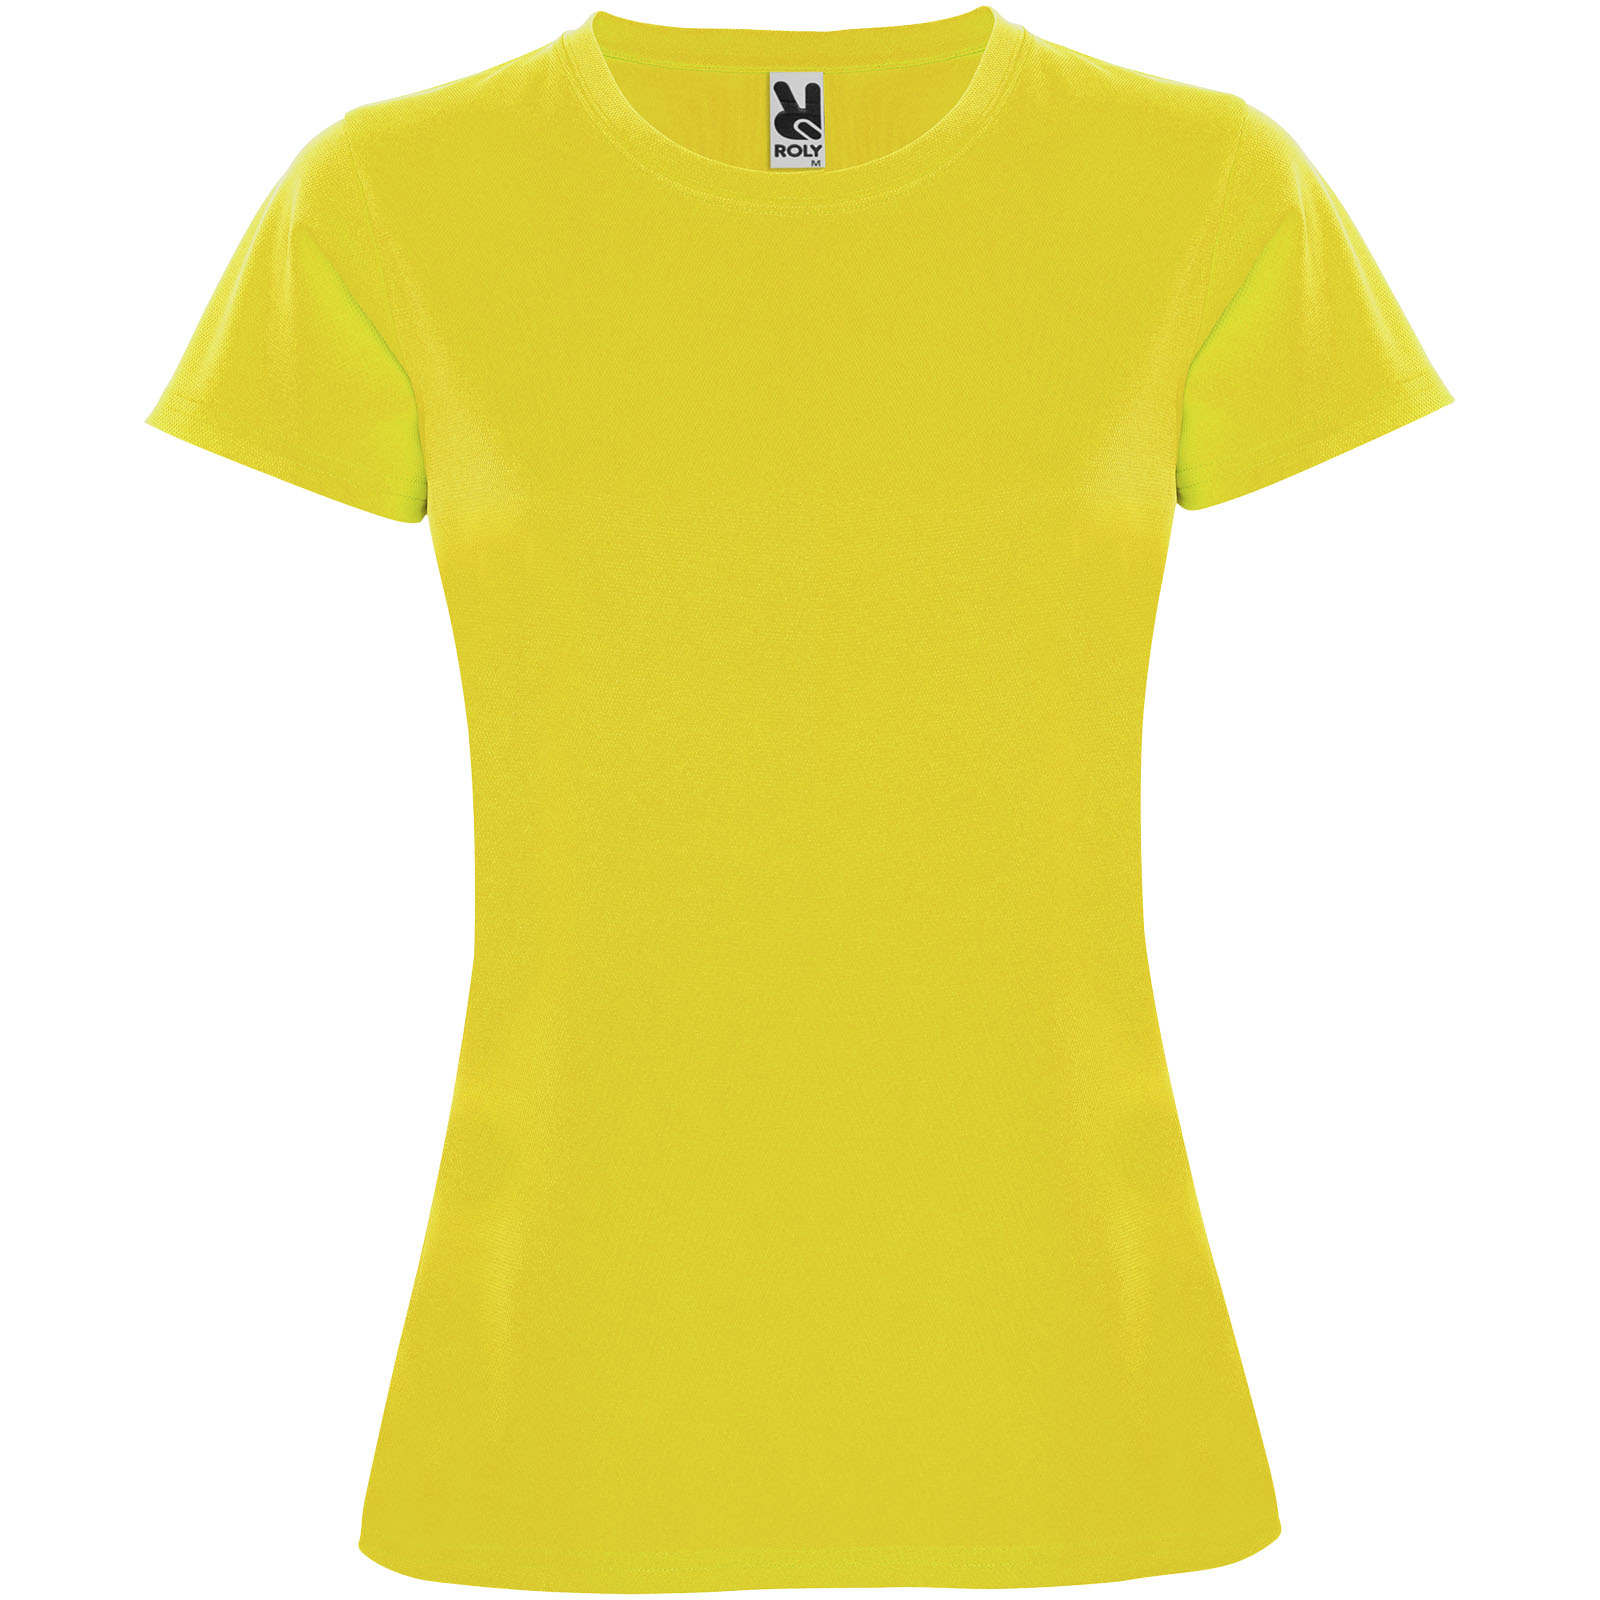 Advertising T-shirts - Montecarlo short sleeve women's sports t-shirt